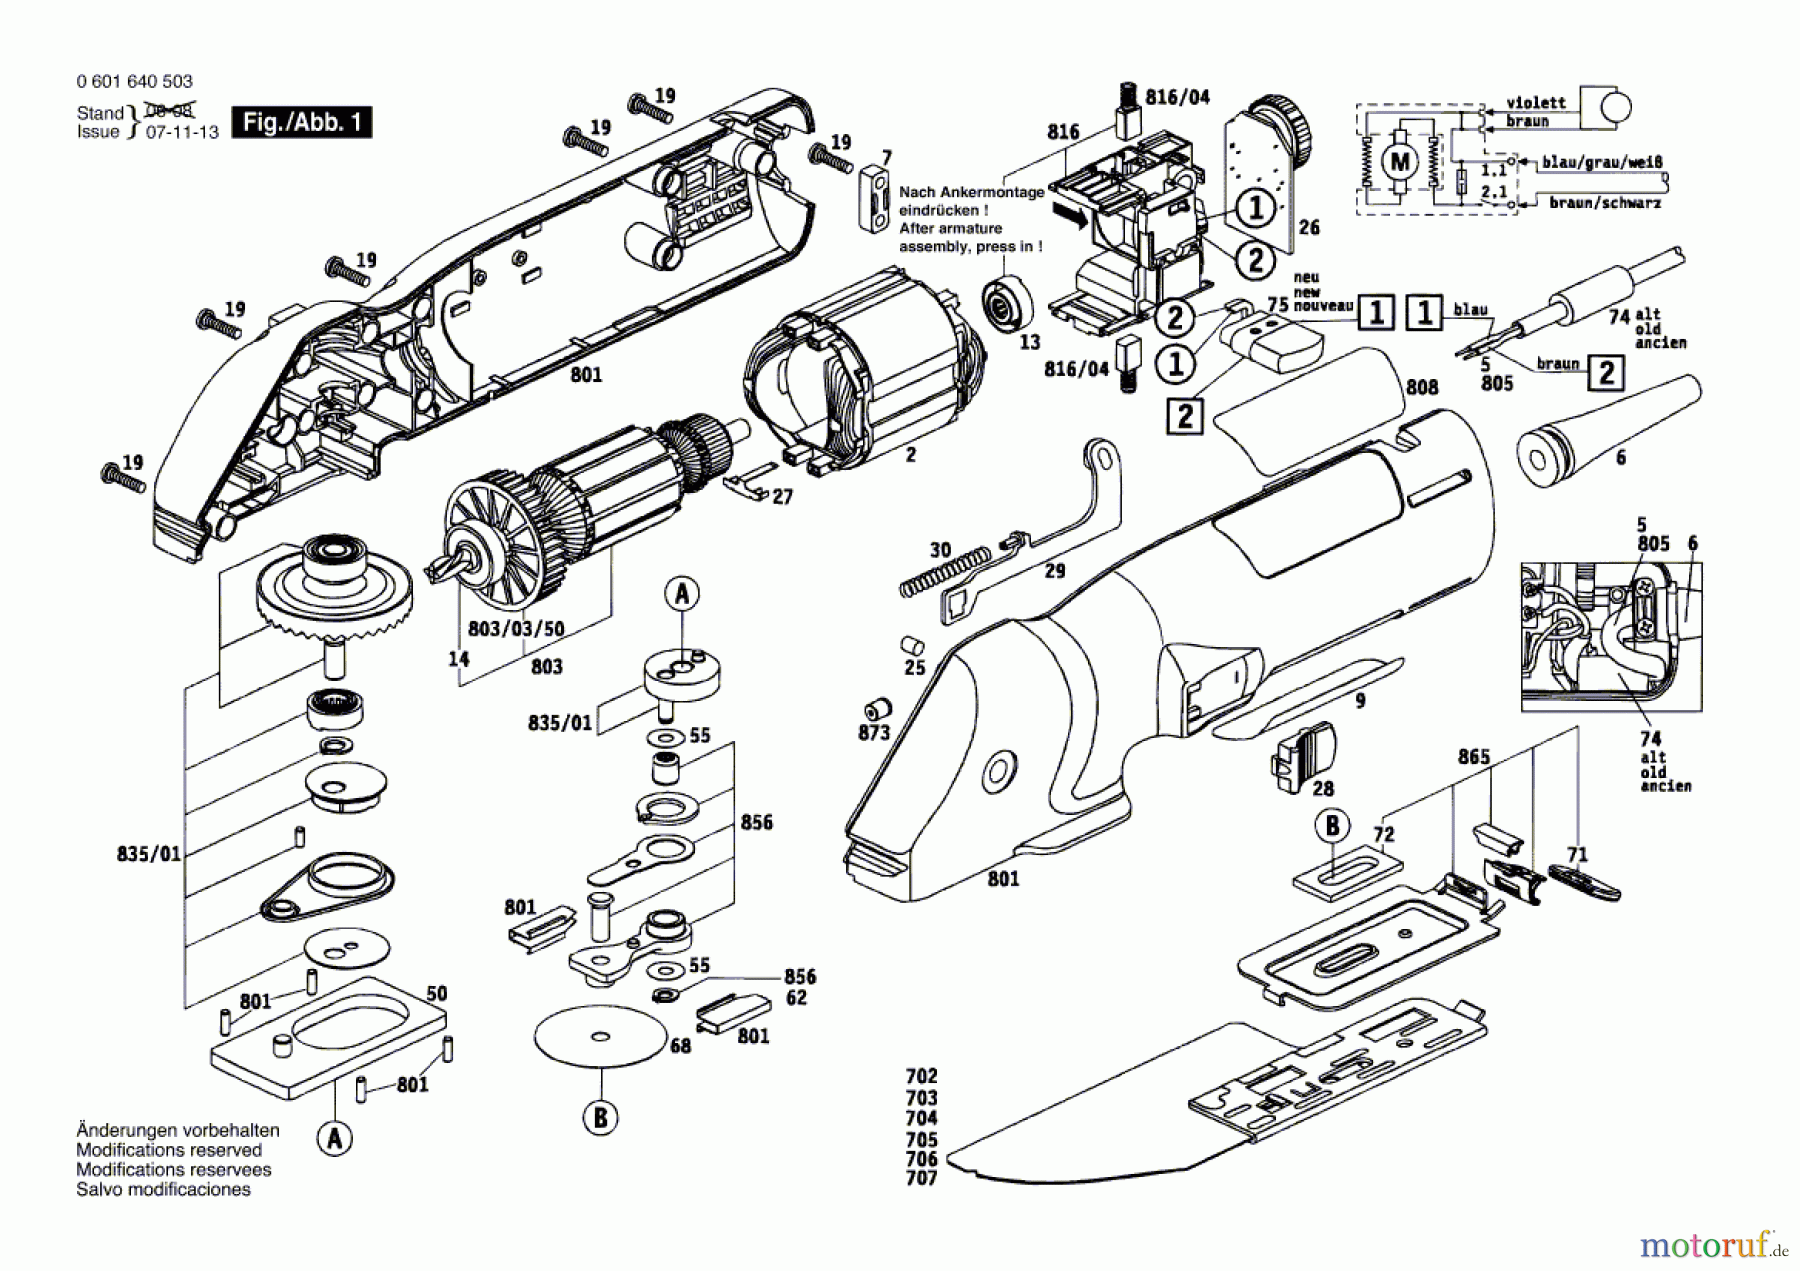  Bosch Werkzeug Feinschnittsäge GFS 350 E SET Seite 1